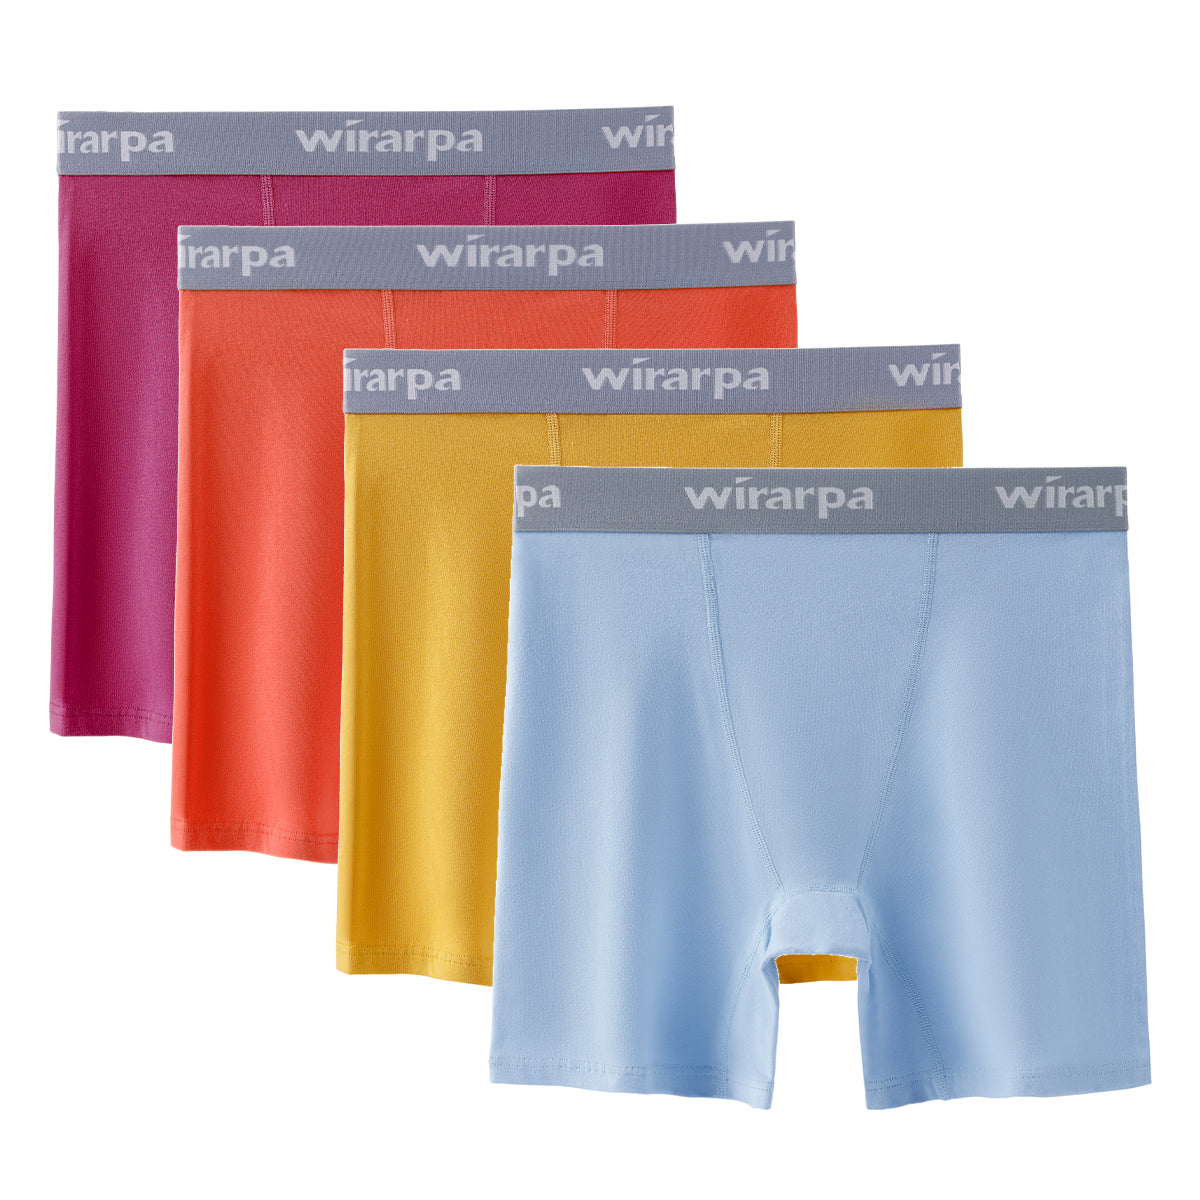  Wirarpa Womens Boxer Briefs Cotton Underwear Anti Chafing Boy  Shorts Panties 5.5 Inseam 4 Pack White XX-Large